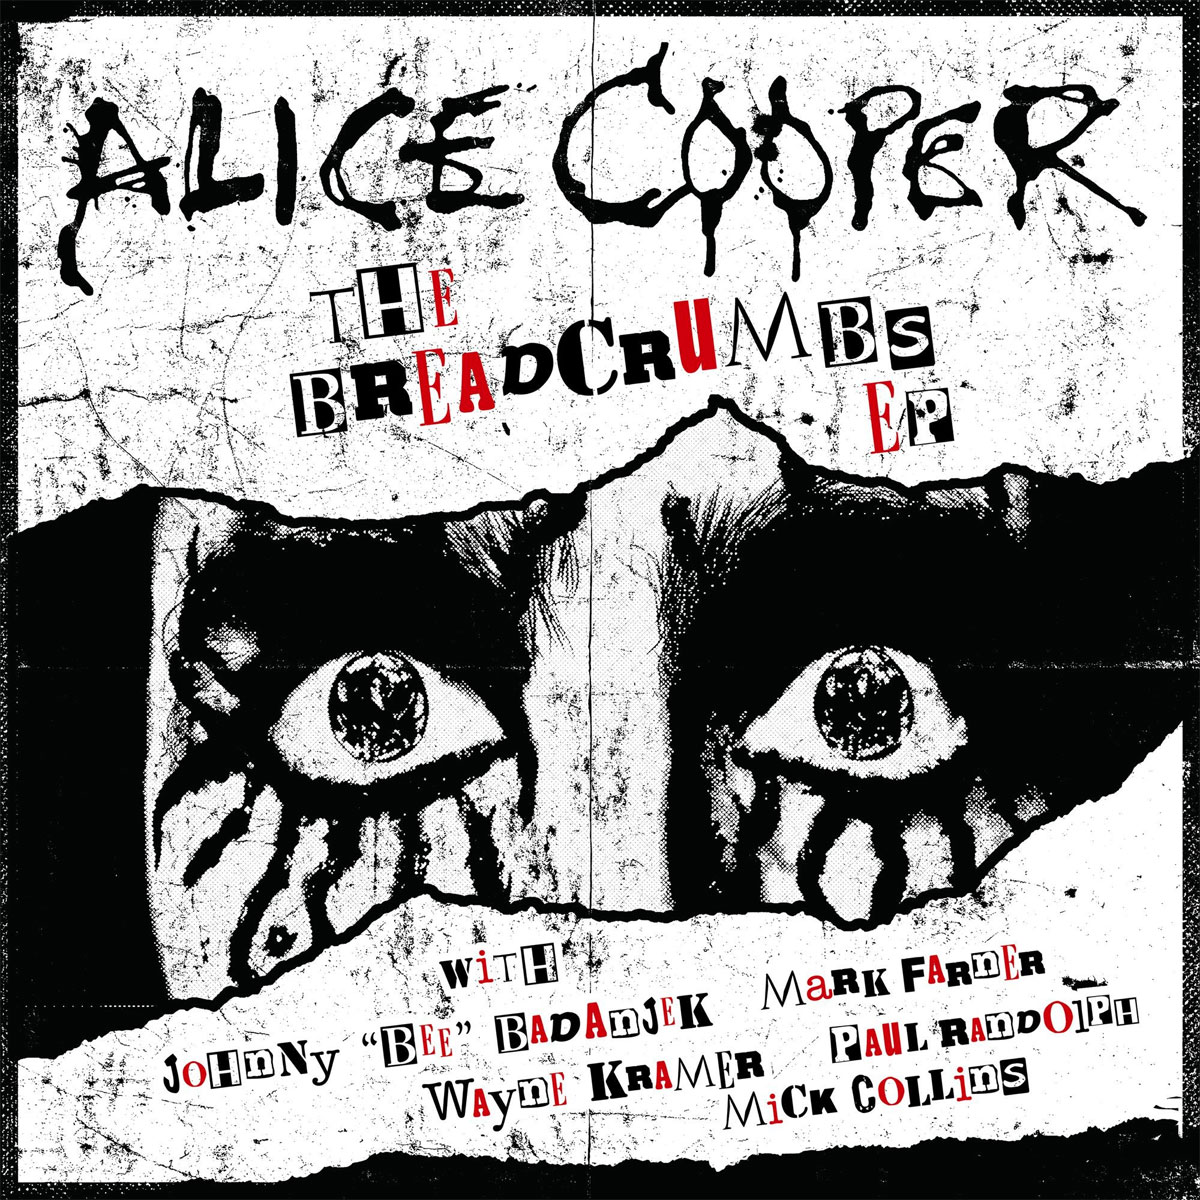 Alice Cooper The Breadcrumbs EP